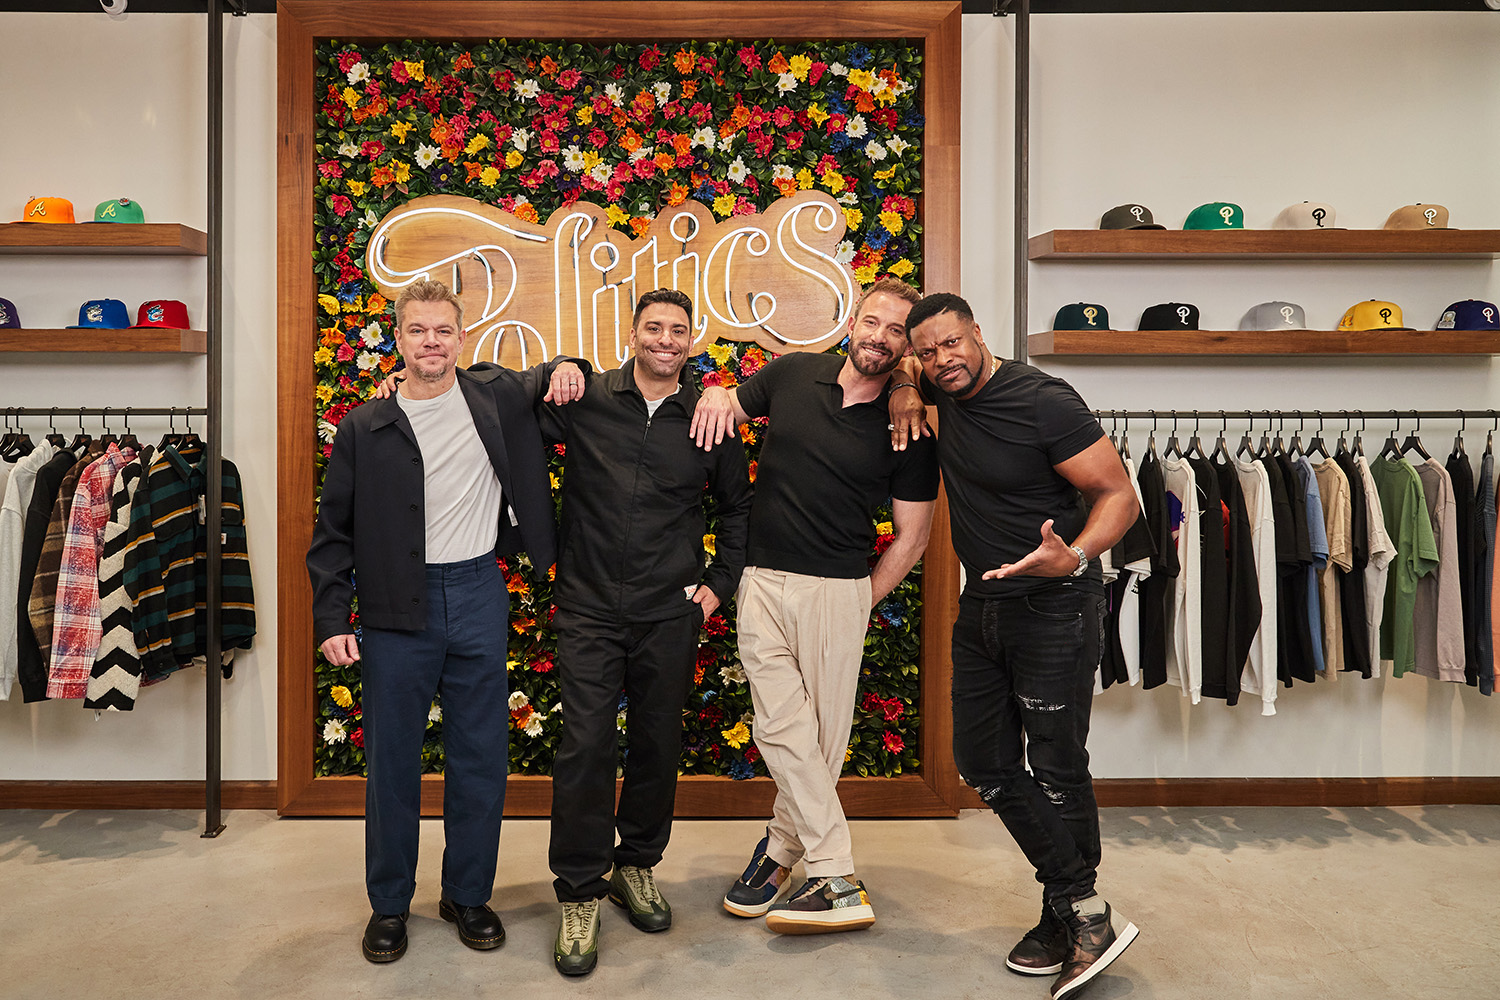 Celebrities, KSI , Matt Damon, Ben Affleck, and Chris Tucker pose with Joe La Puma at his storefront